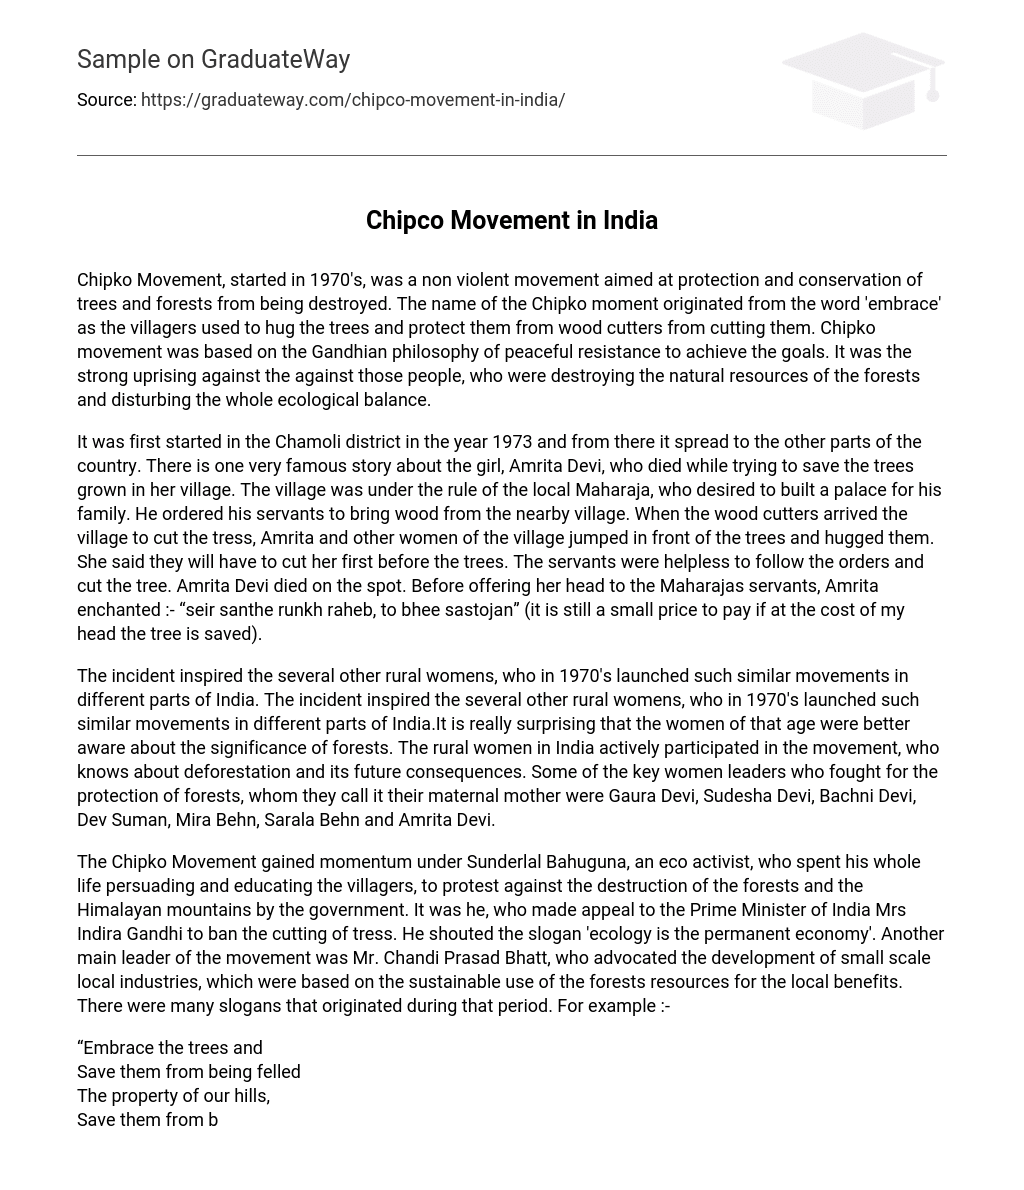 Chipco Movement in India